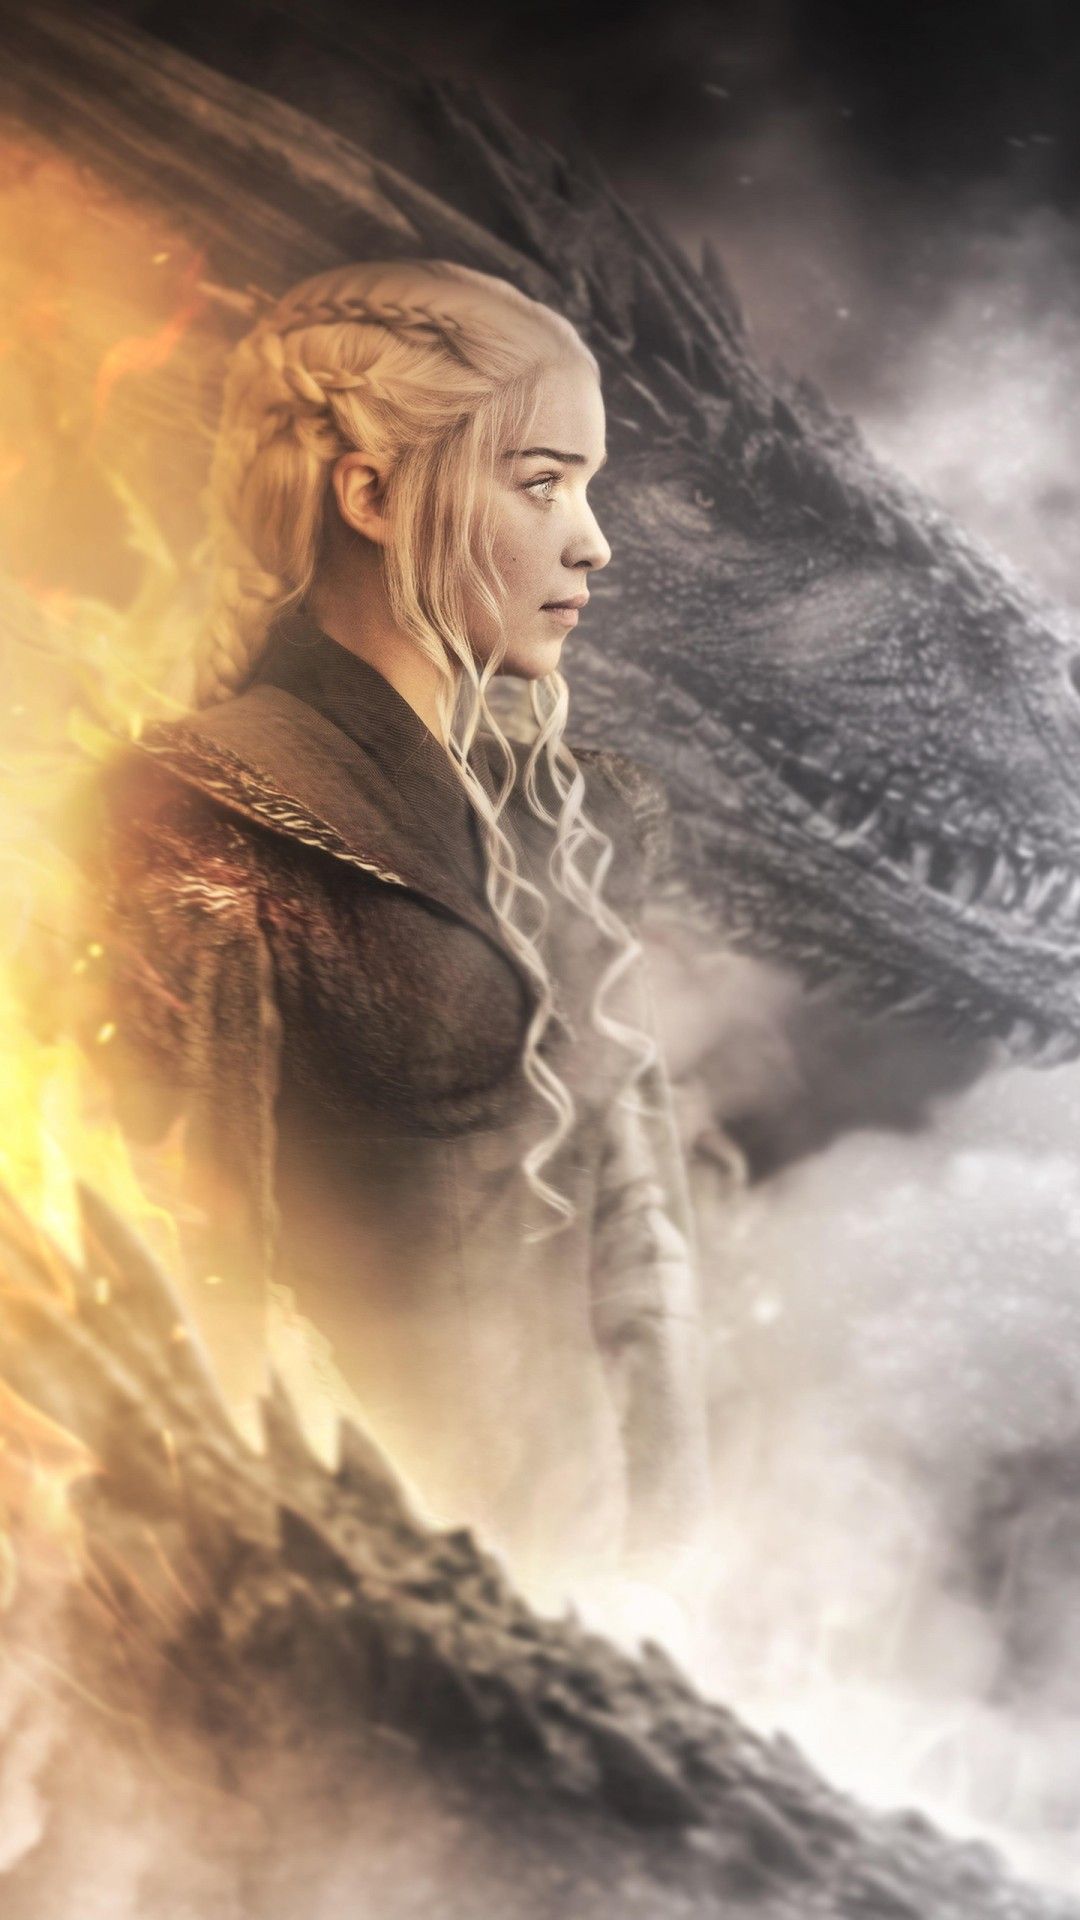 Dragon Game of Thrones iPhone Wallpaper Free Dragon Game